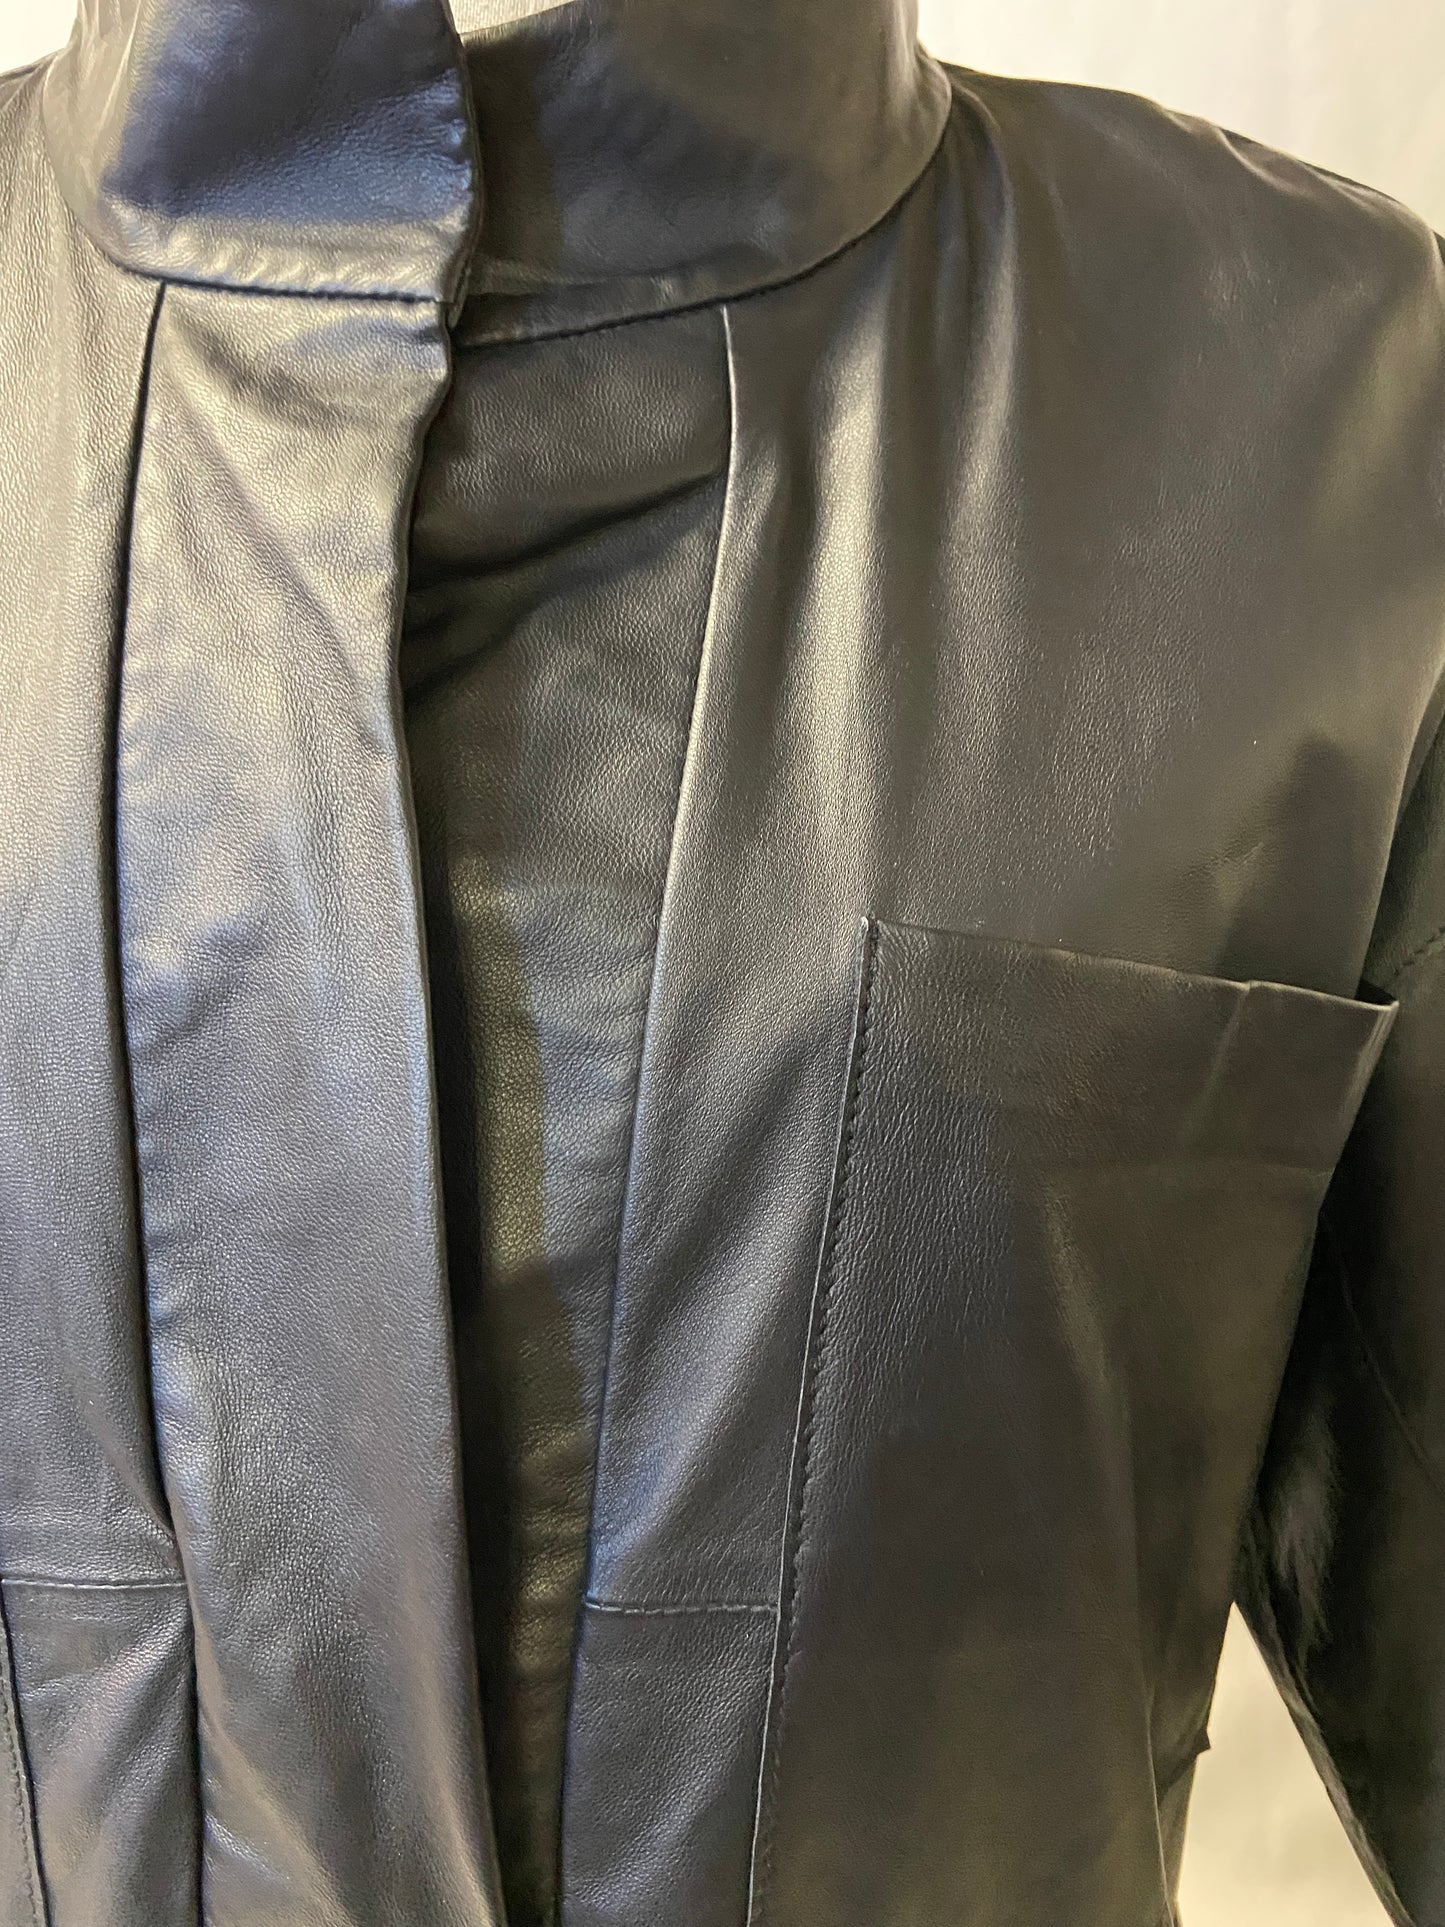 SCHAI Size S/M Black Leather Tunic Top